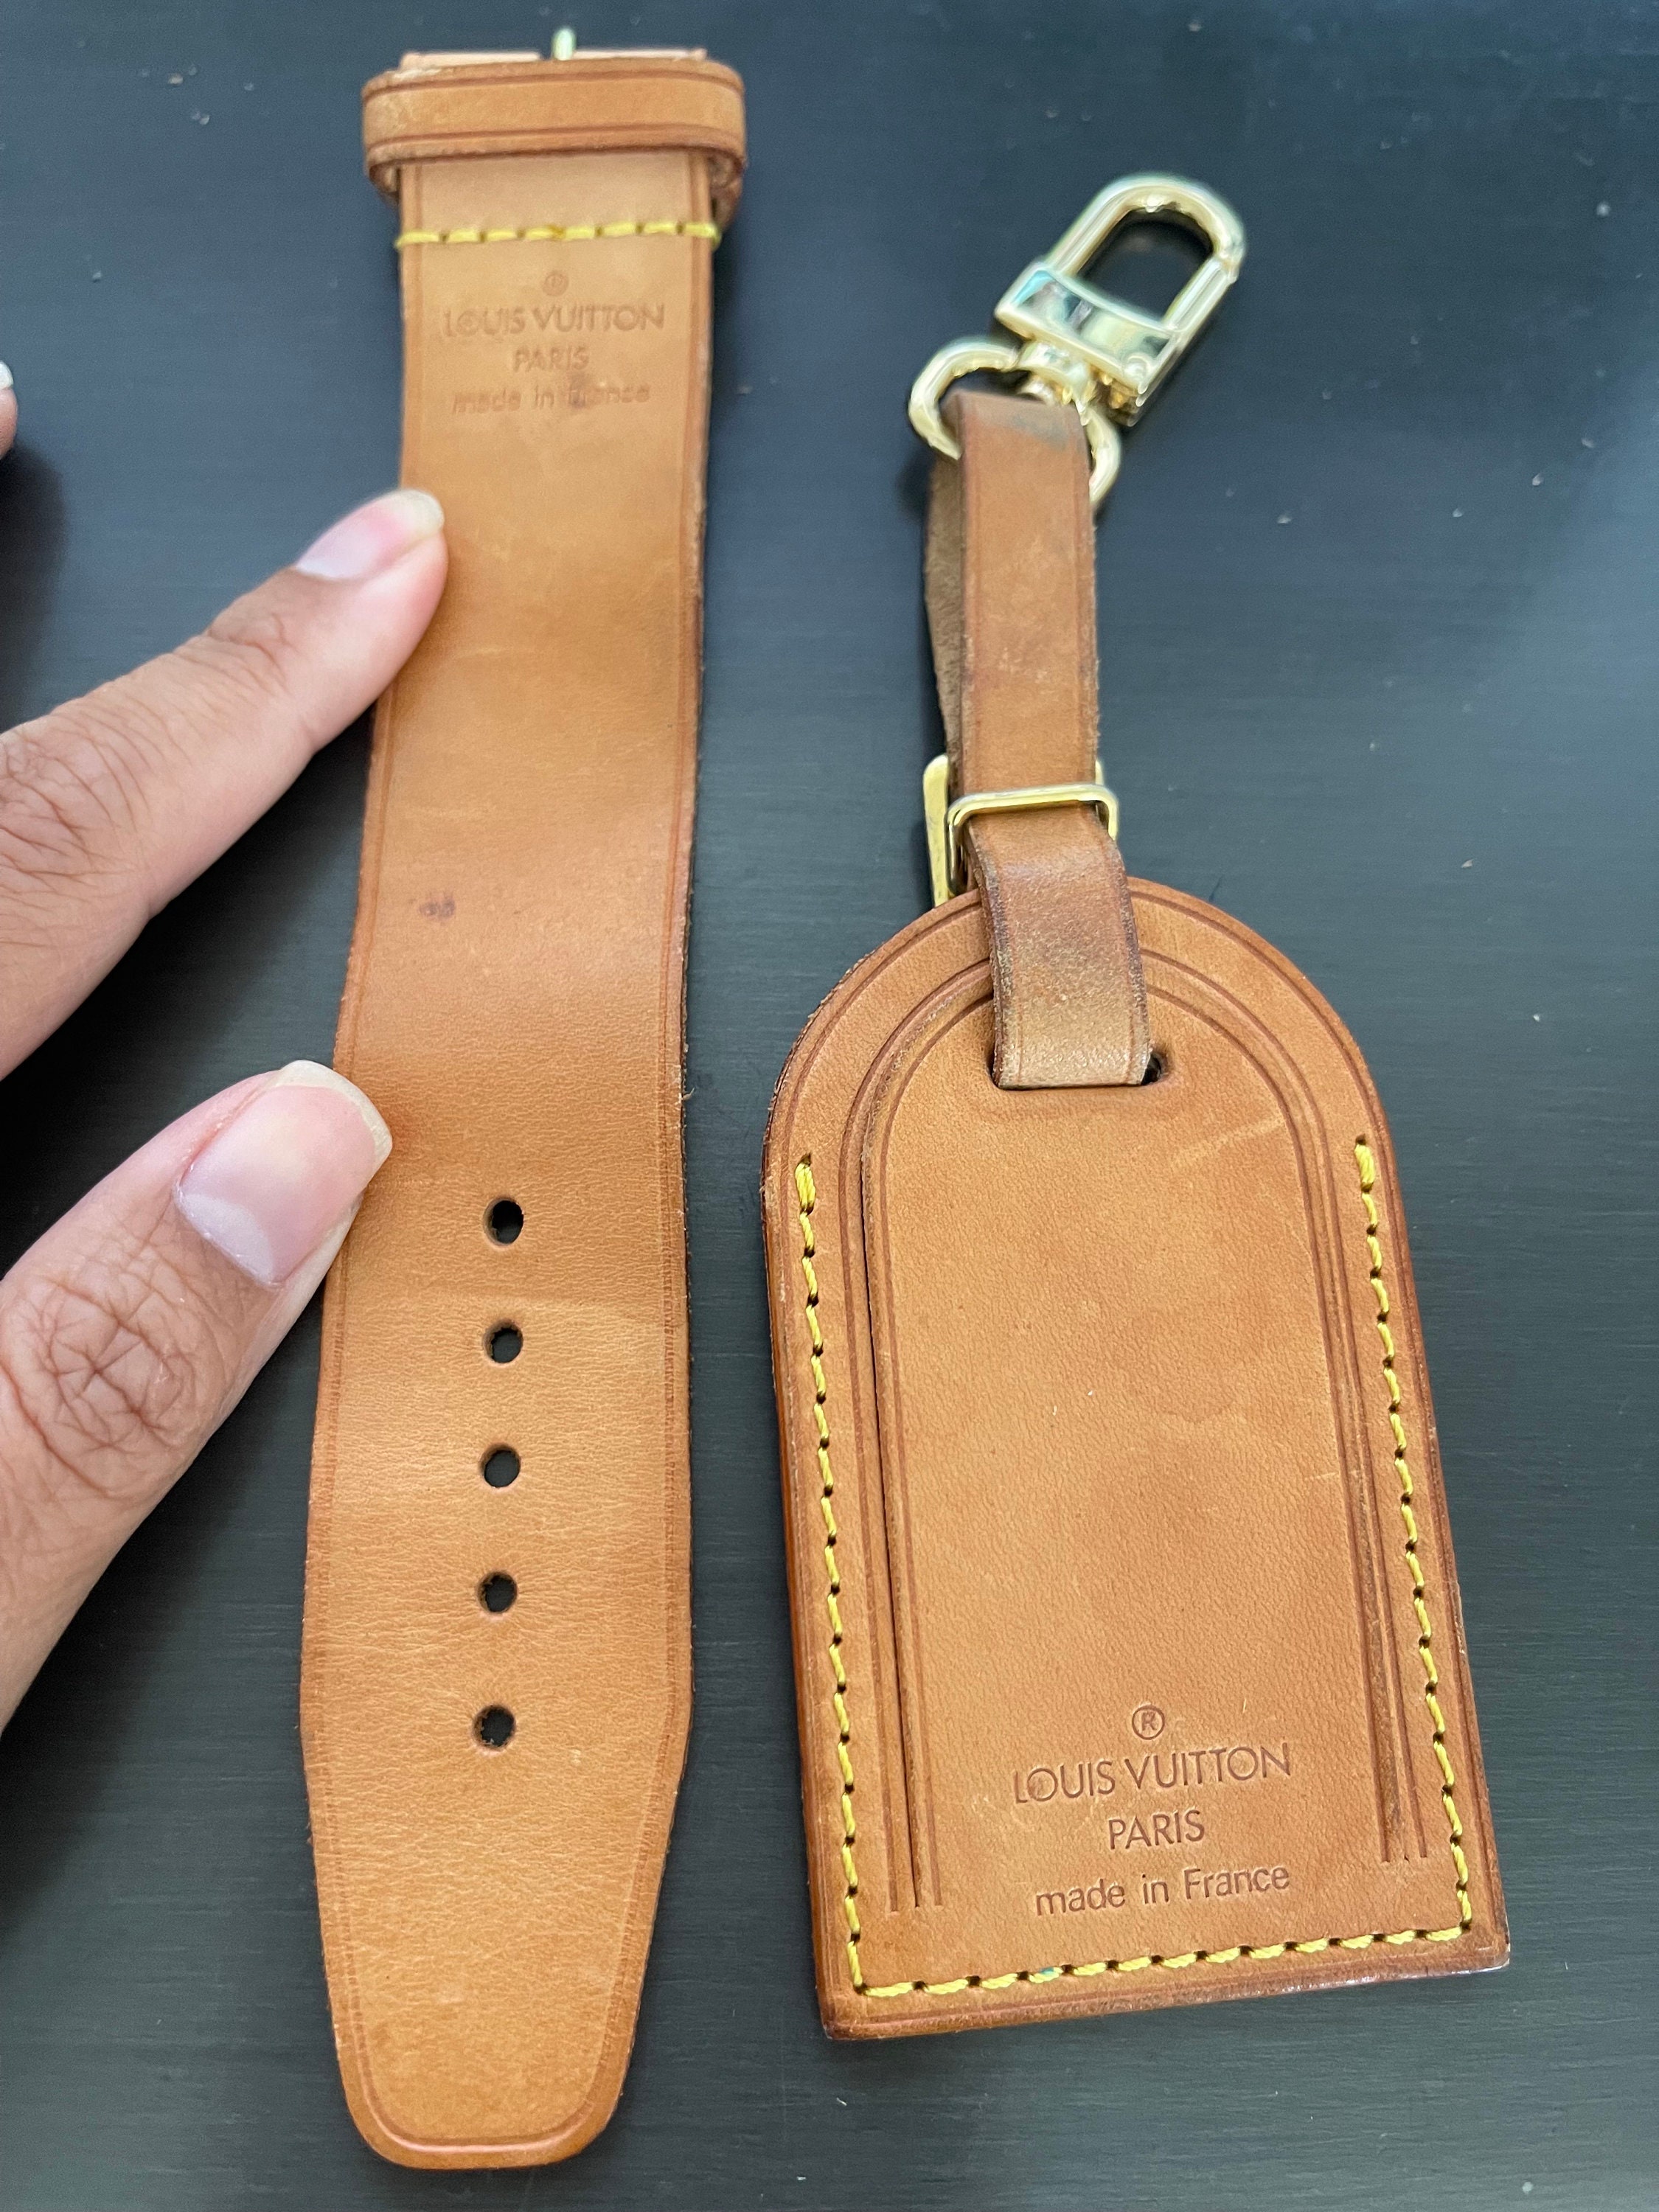 Louis Vuitton Vachetta Leather Luggage Tag and Poignet Bag Charm